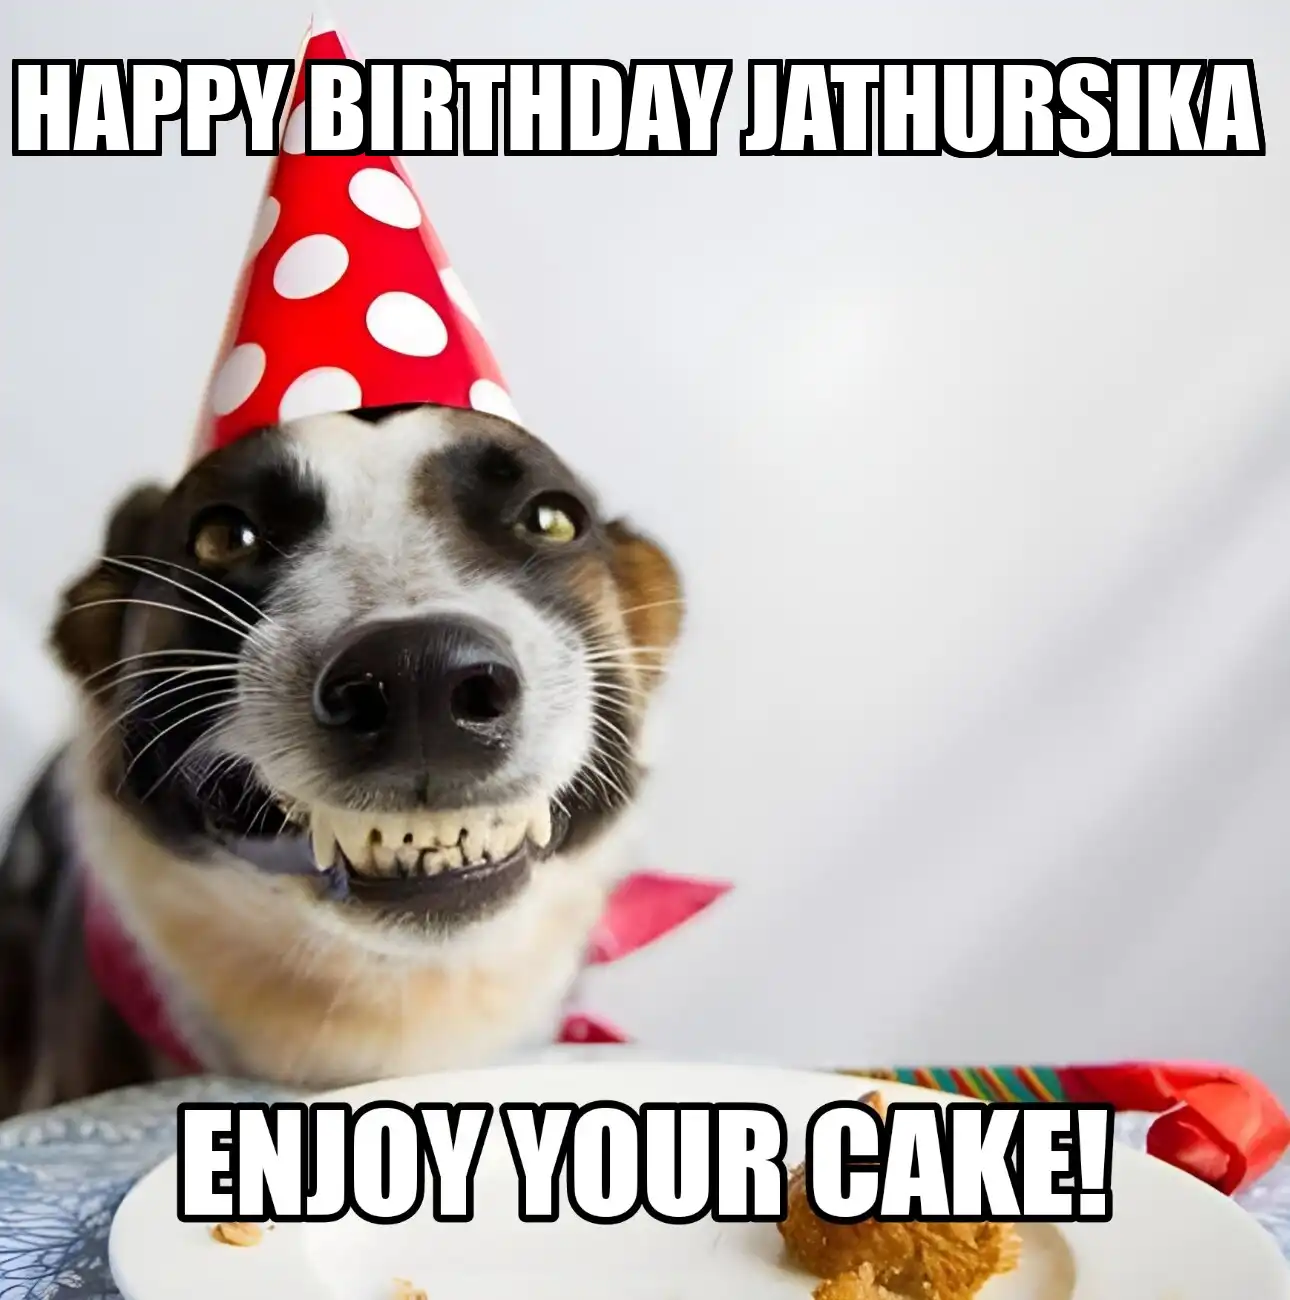 Happy Birthday Jathursika Enjoy Your Cake Dog Meme